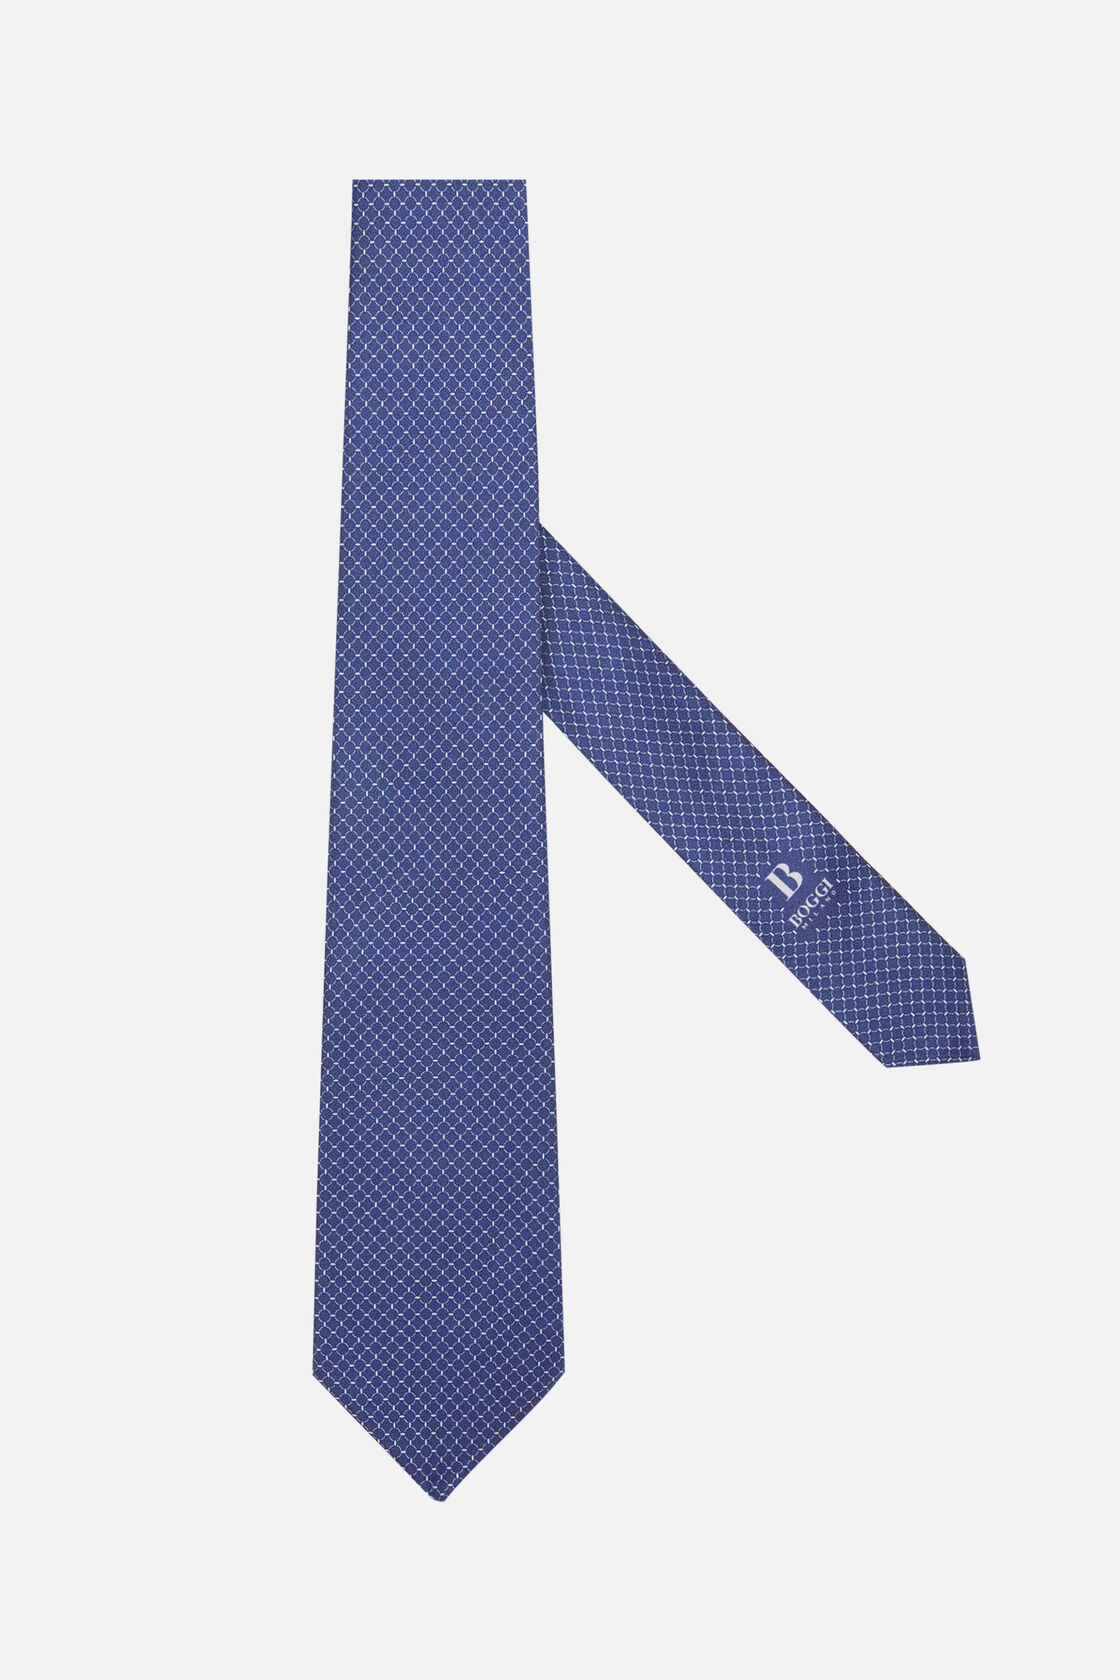 Cravatta Motivo Staffe In Seta, Navy, hi-res